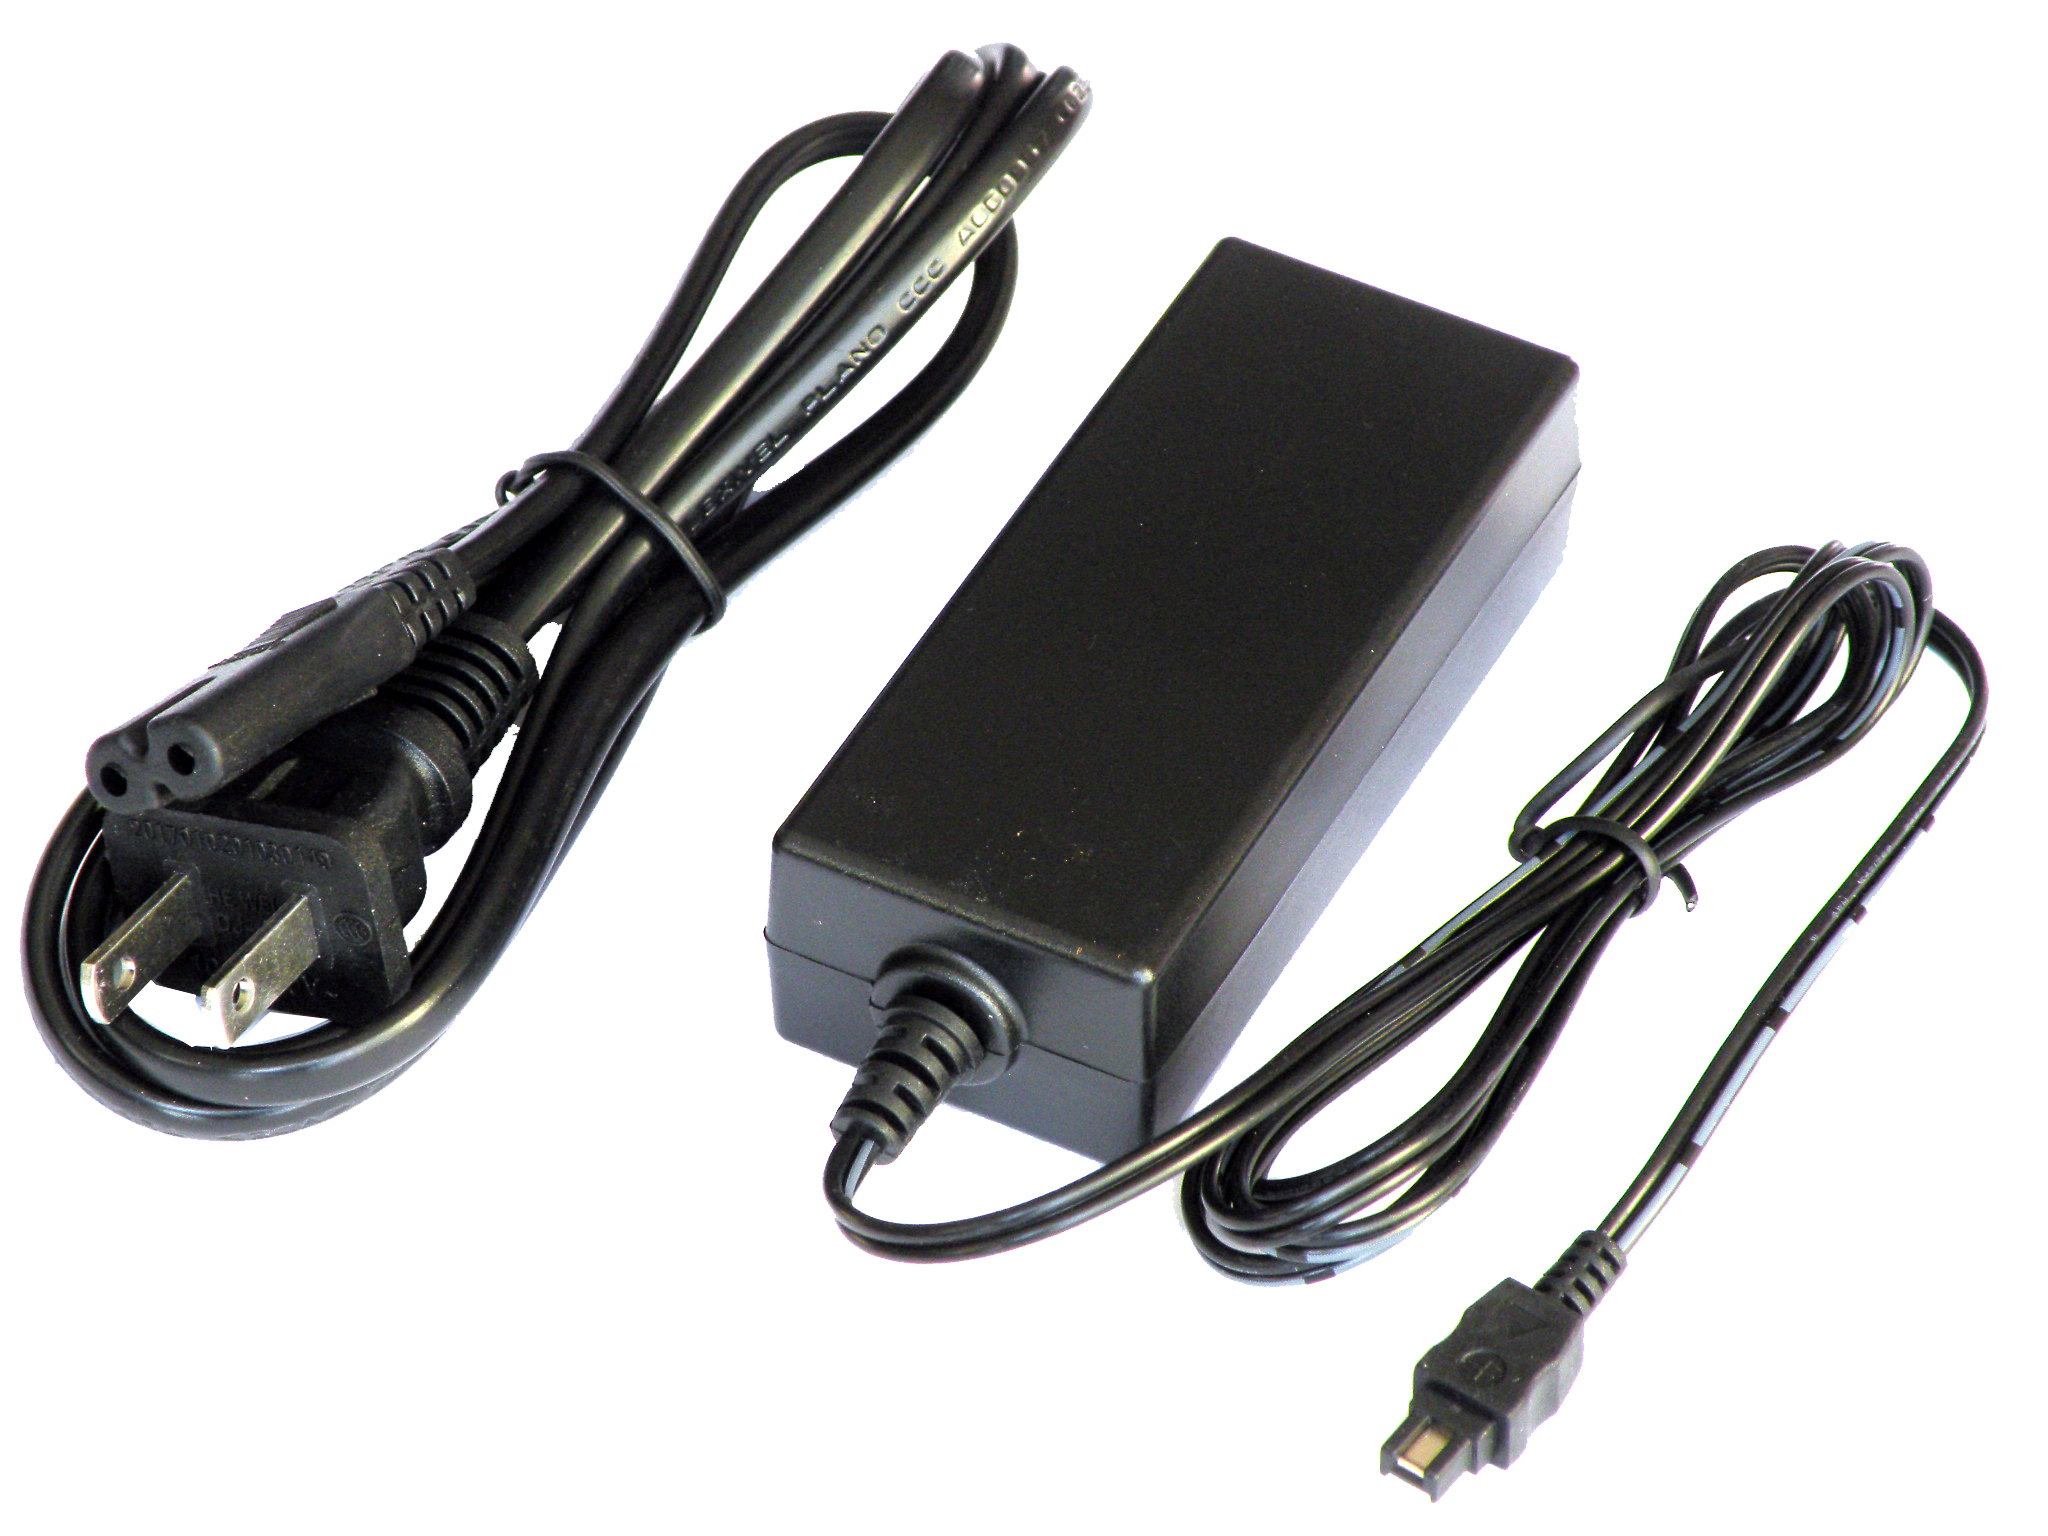 iTEKIRO AC Adapter for Sony DCR-SX45/L, DCR-SX45/S, DCR-SX53, DCR-SX53E, DCR-SX60, DCR-SX60E, DCR-SX63, DCR-SX63E/S, DCR-SX63E, DCR-SX73 - image 3 of 5